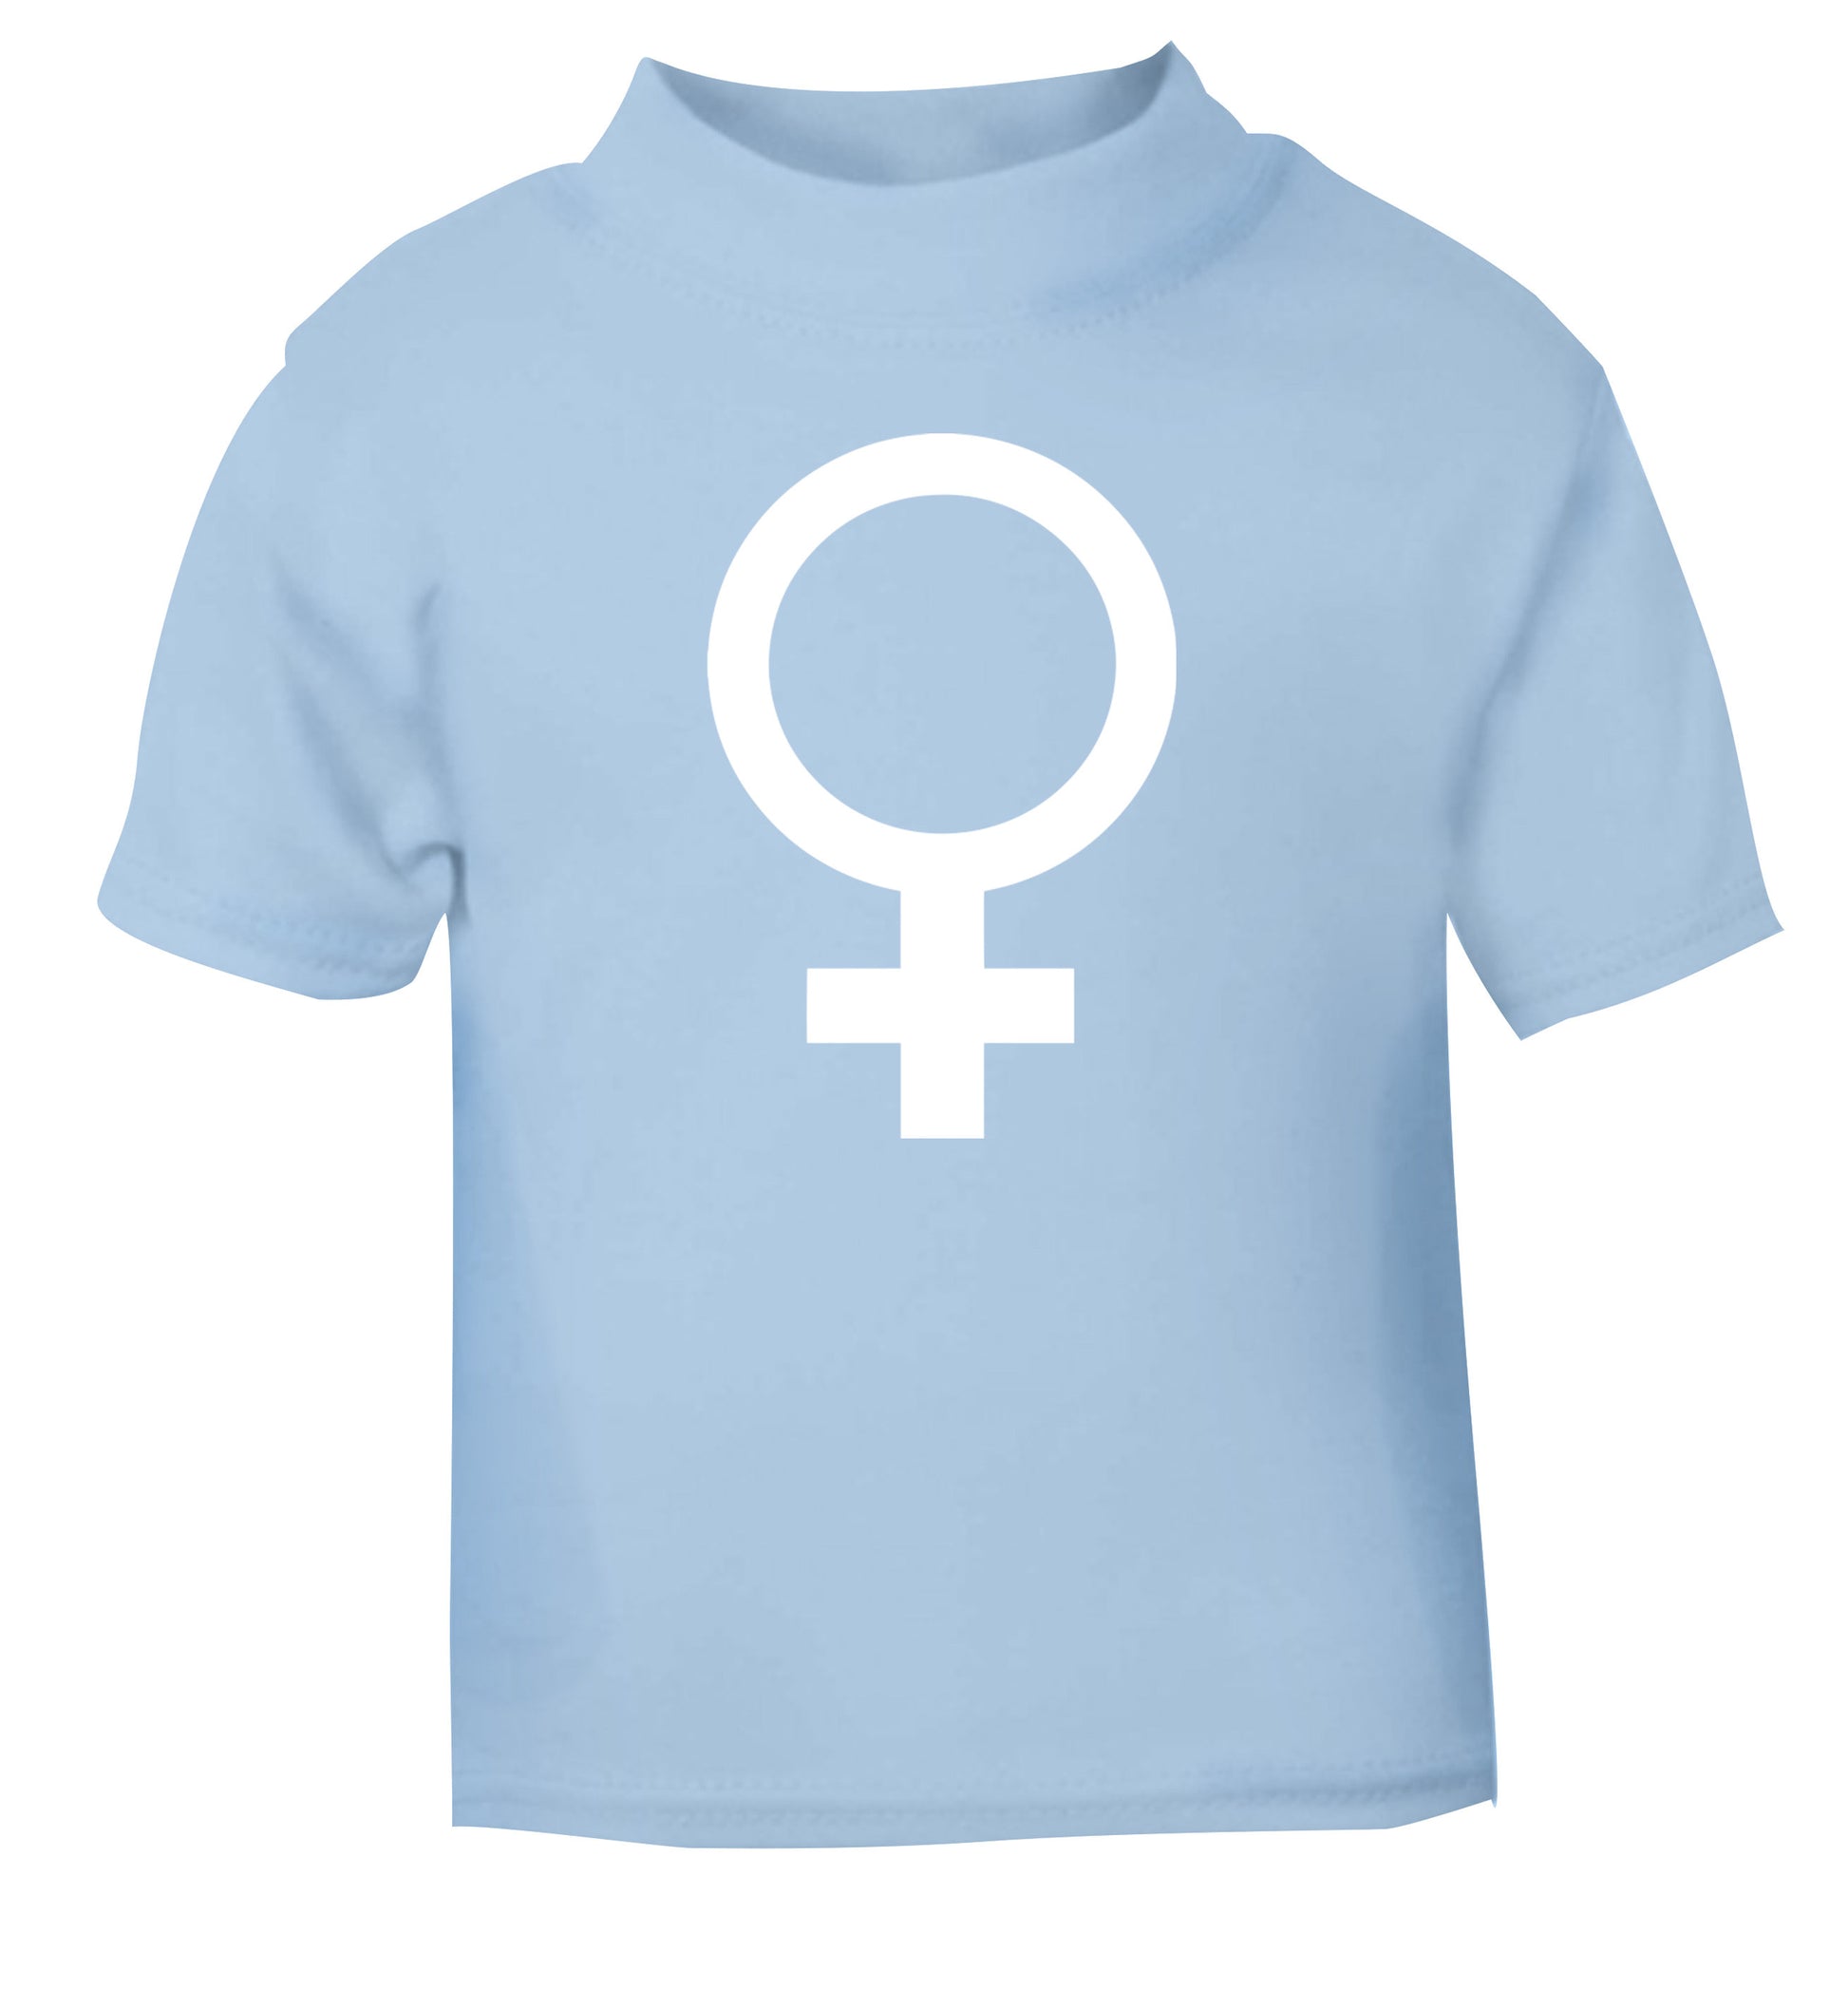 Female symbol large light blue Baby Toddler Tshirt 2 Years